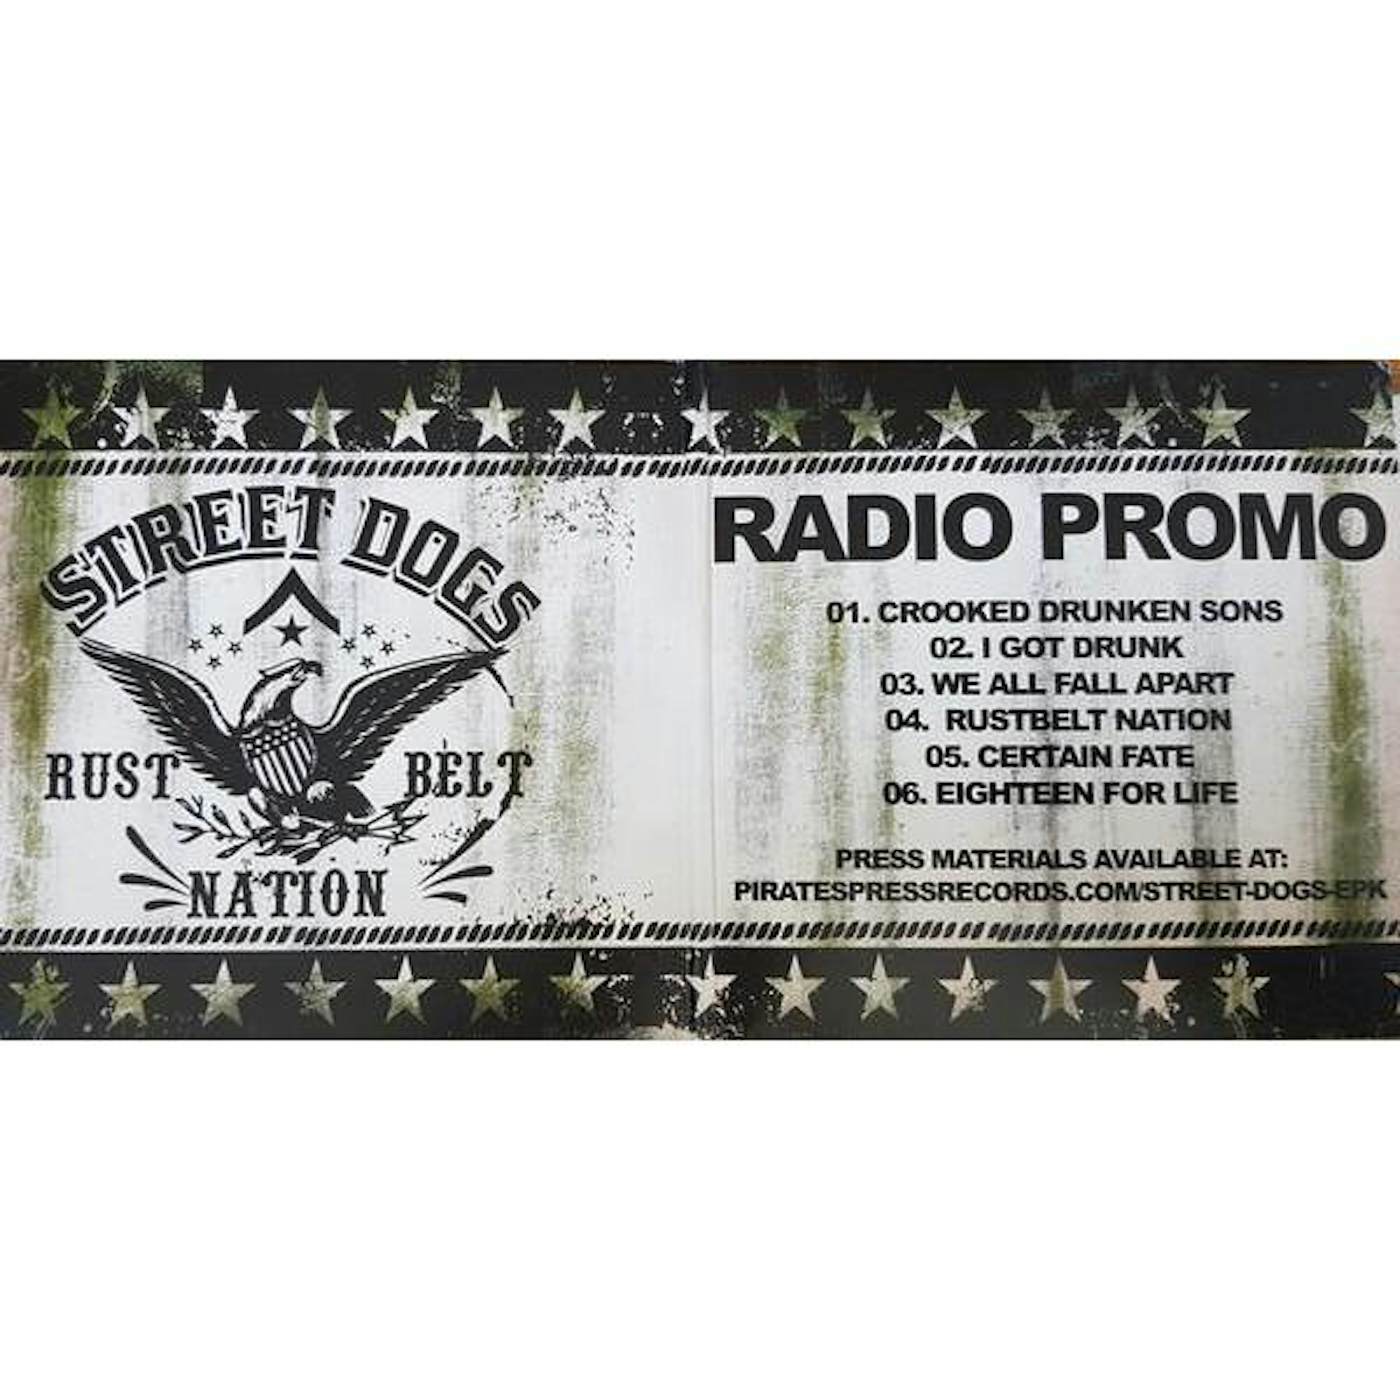 Street Dogs - Crooked Drunken Sons / Rustbelt Nation 9" / CD